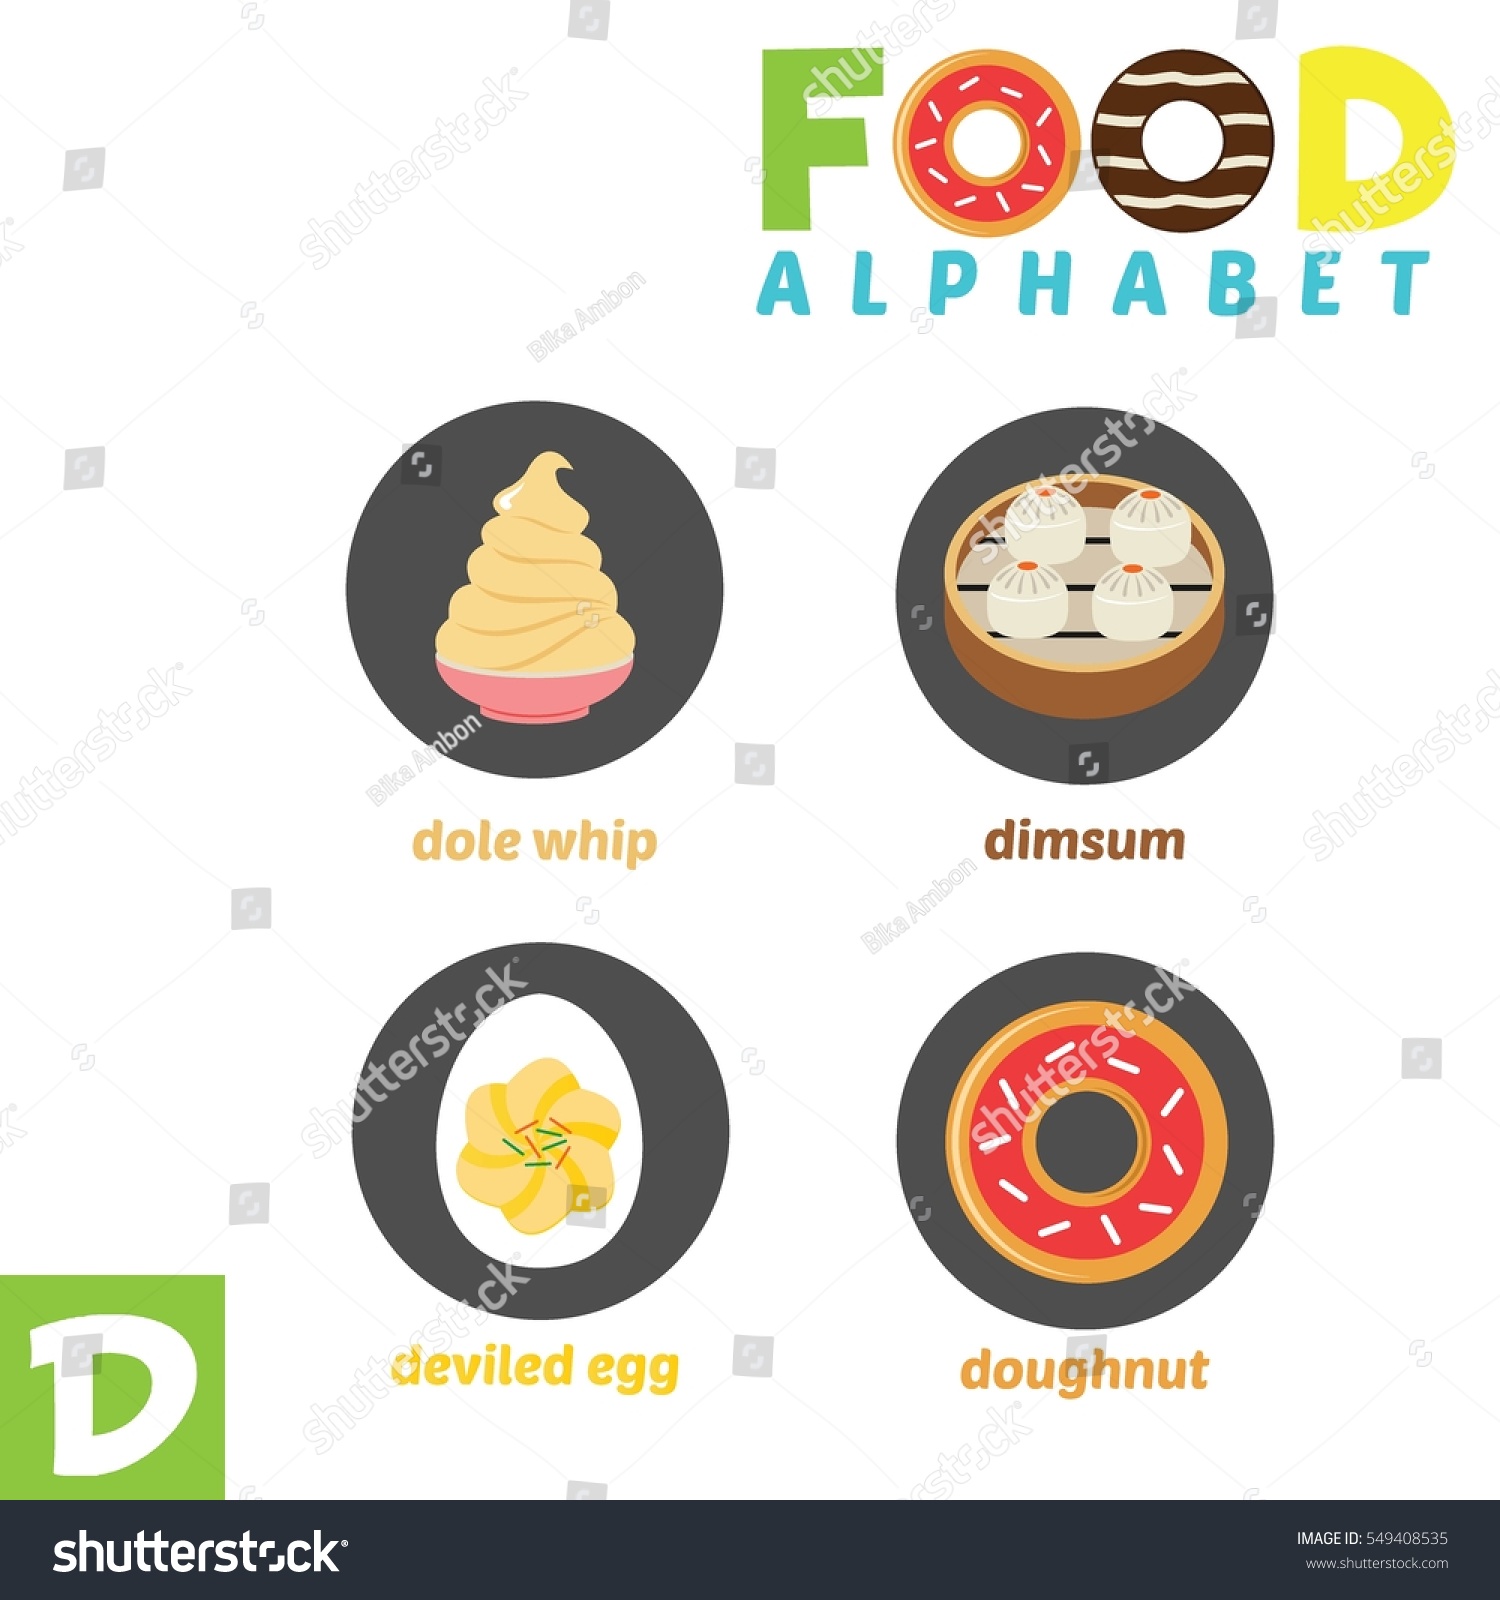 SVG of Vector Illustration of alphabet food with D Letter. svg